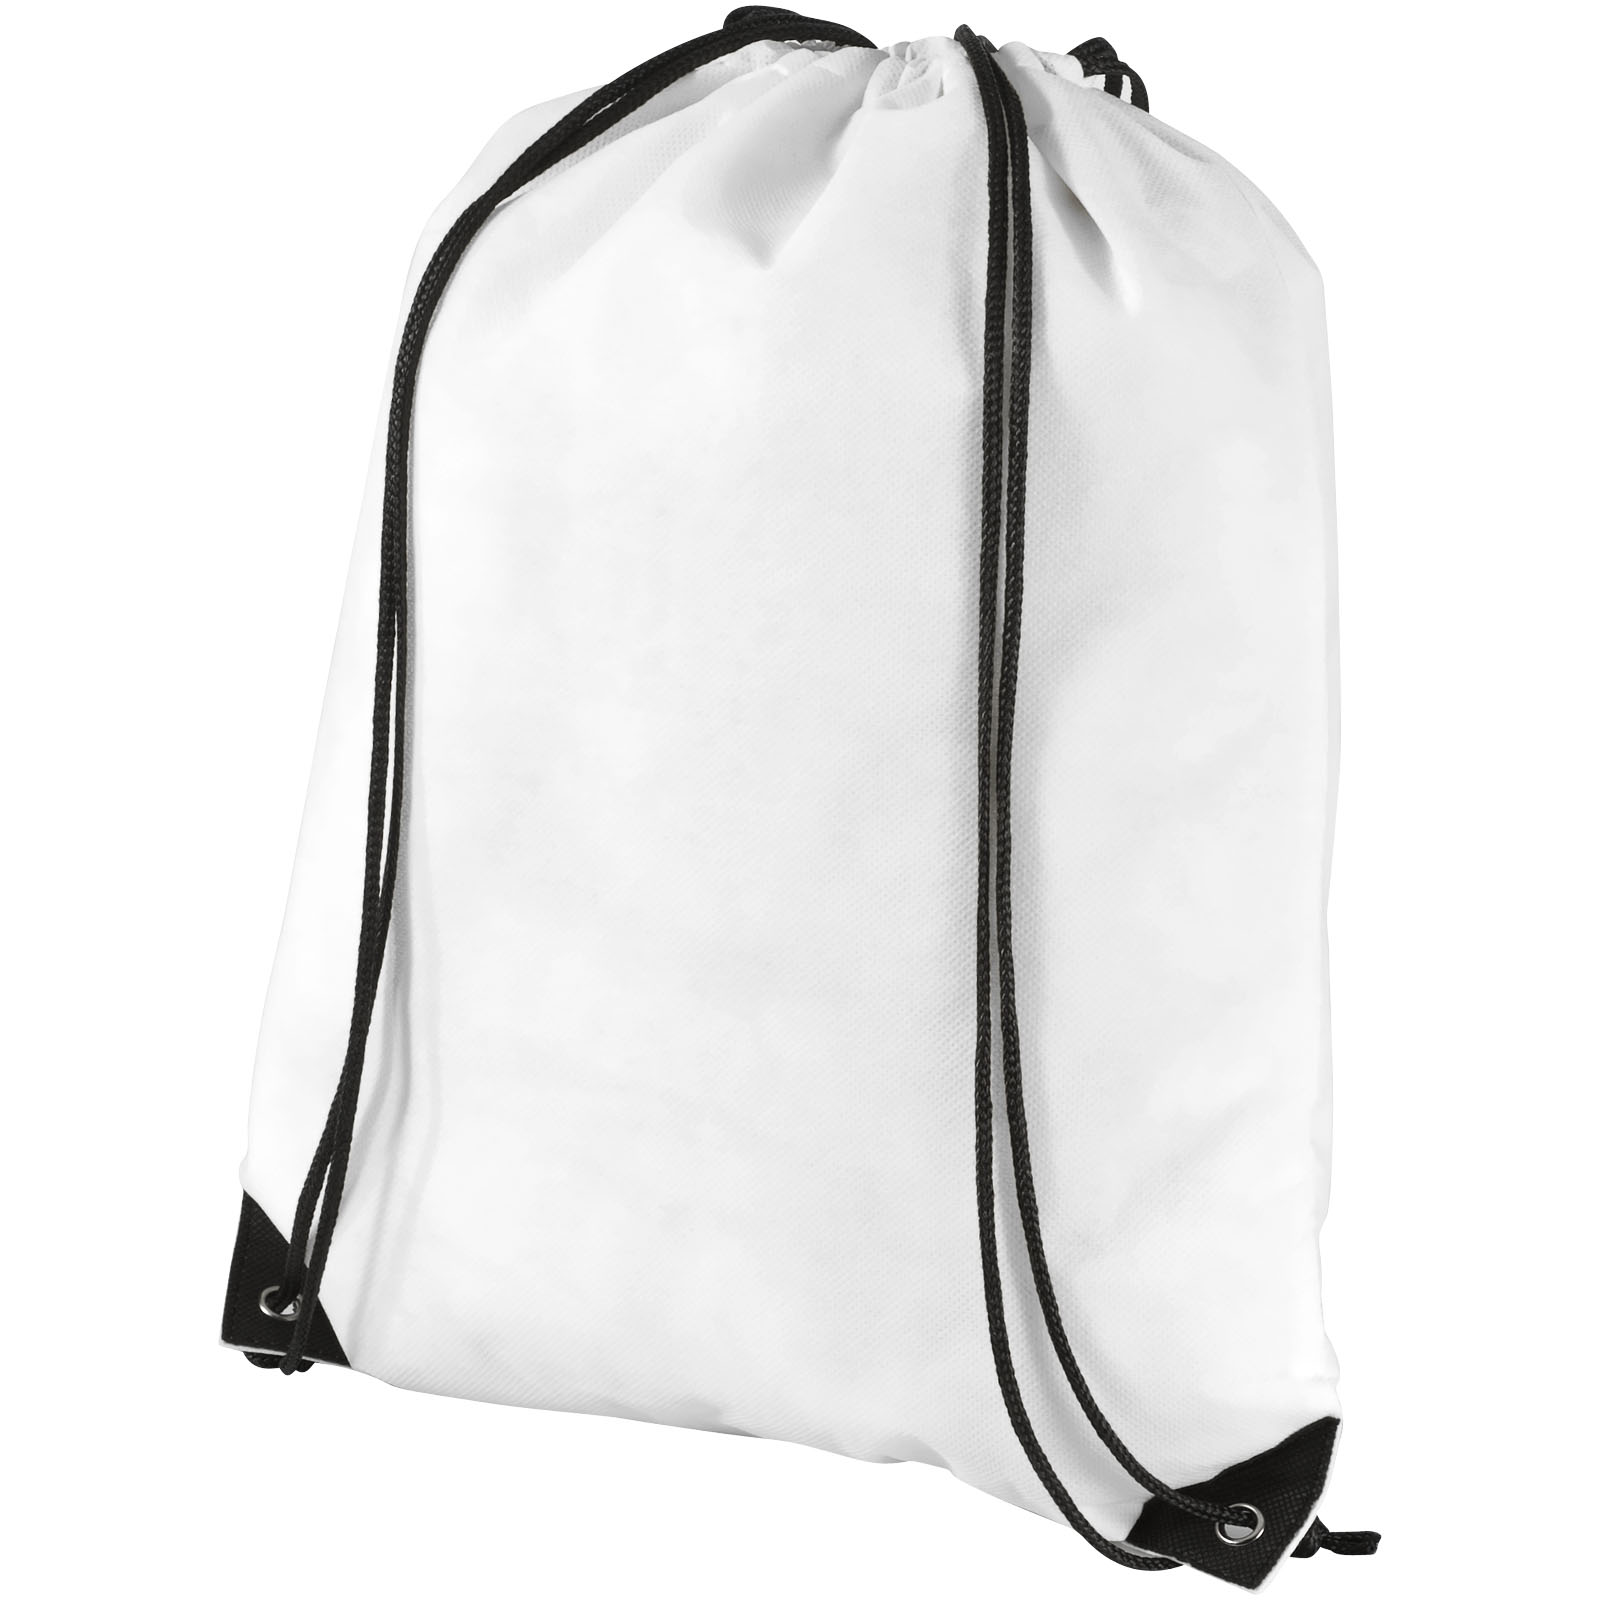 Bags - Evergreen non-woven drawstring bag 5L